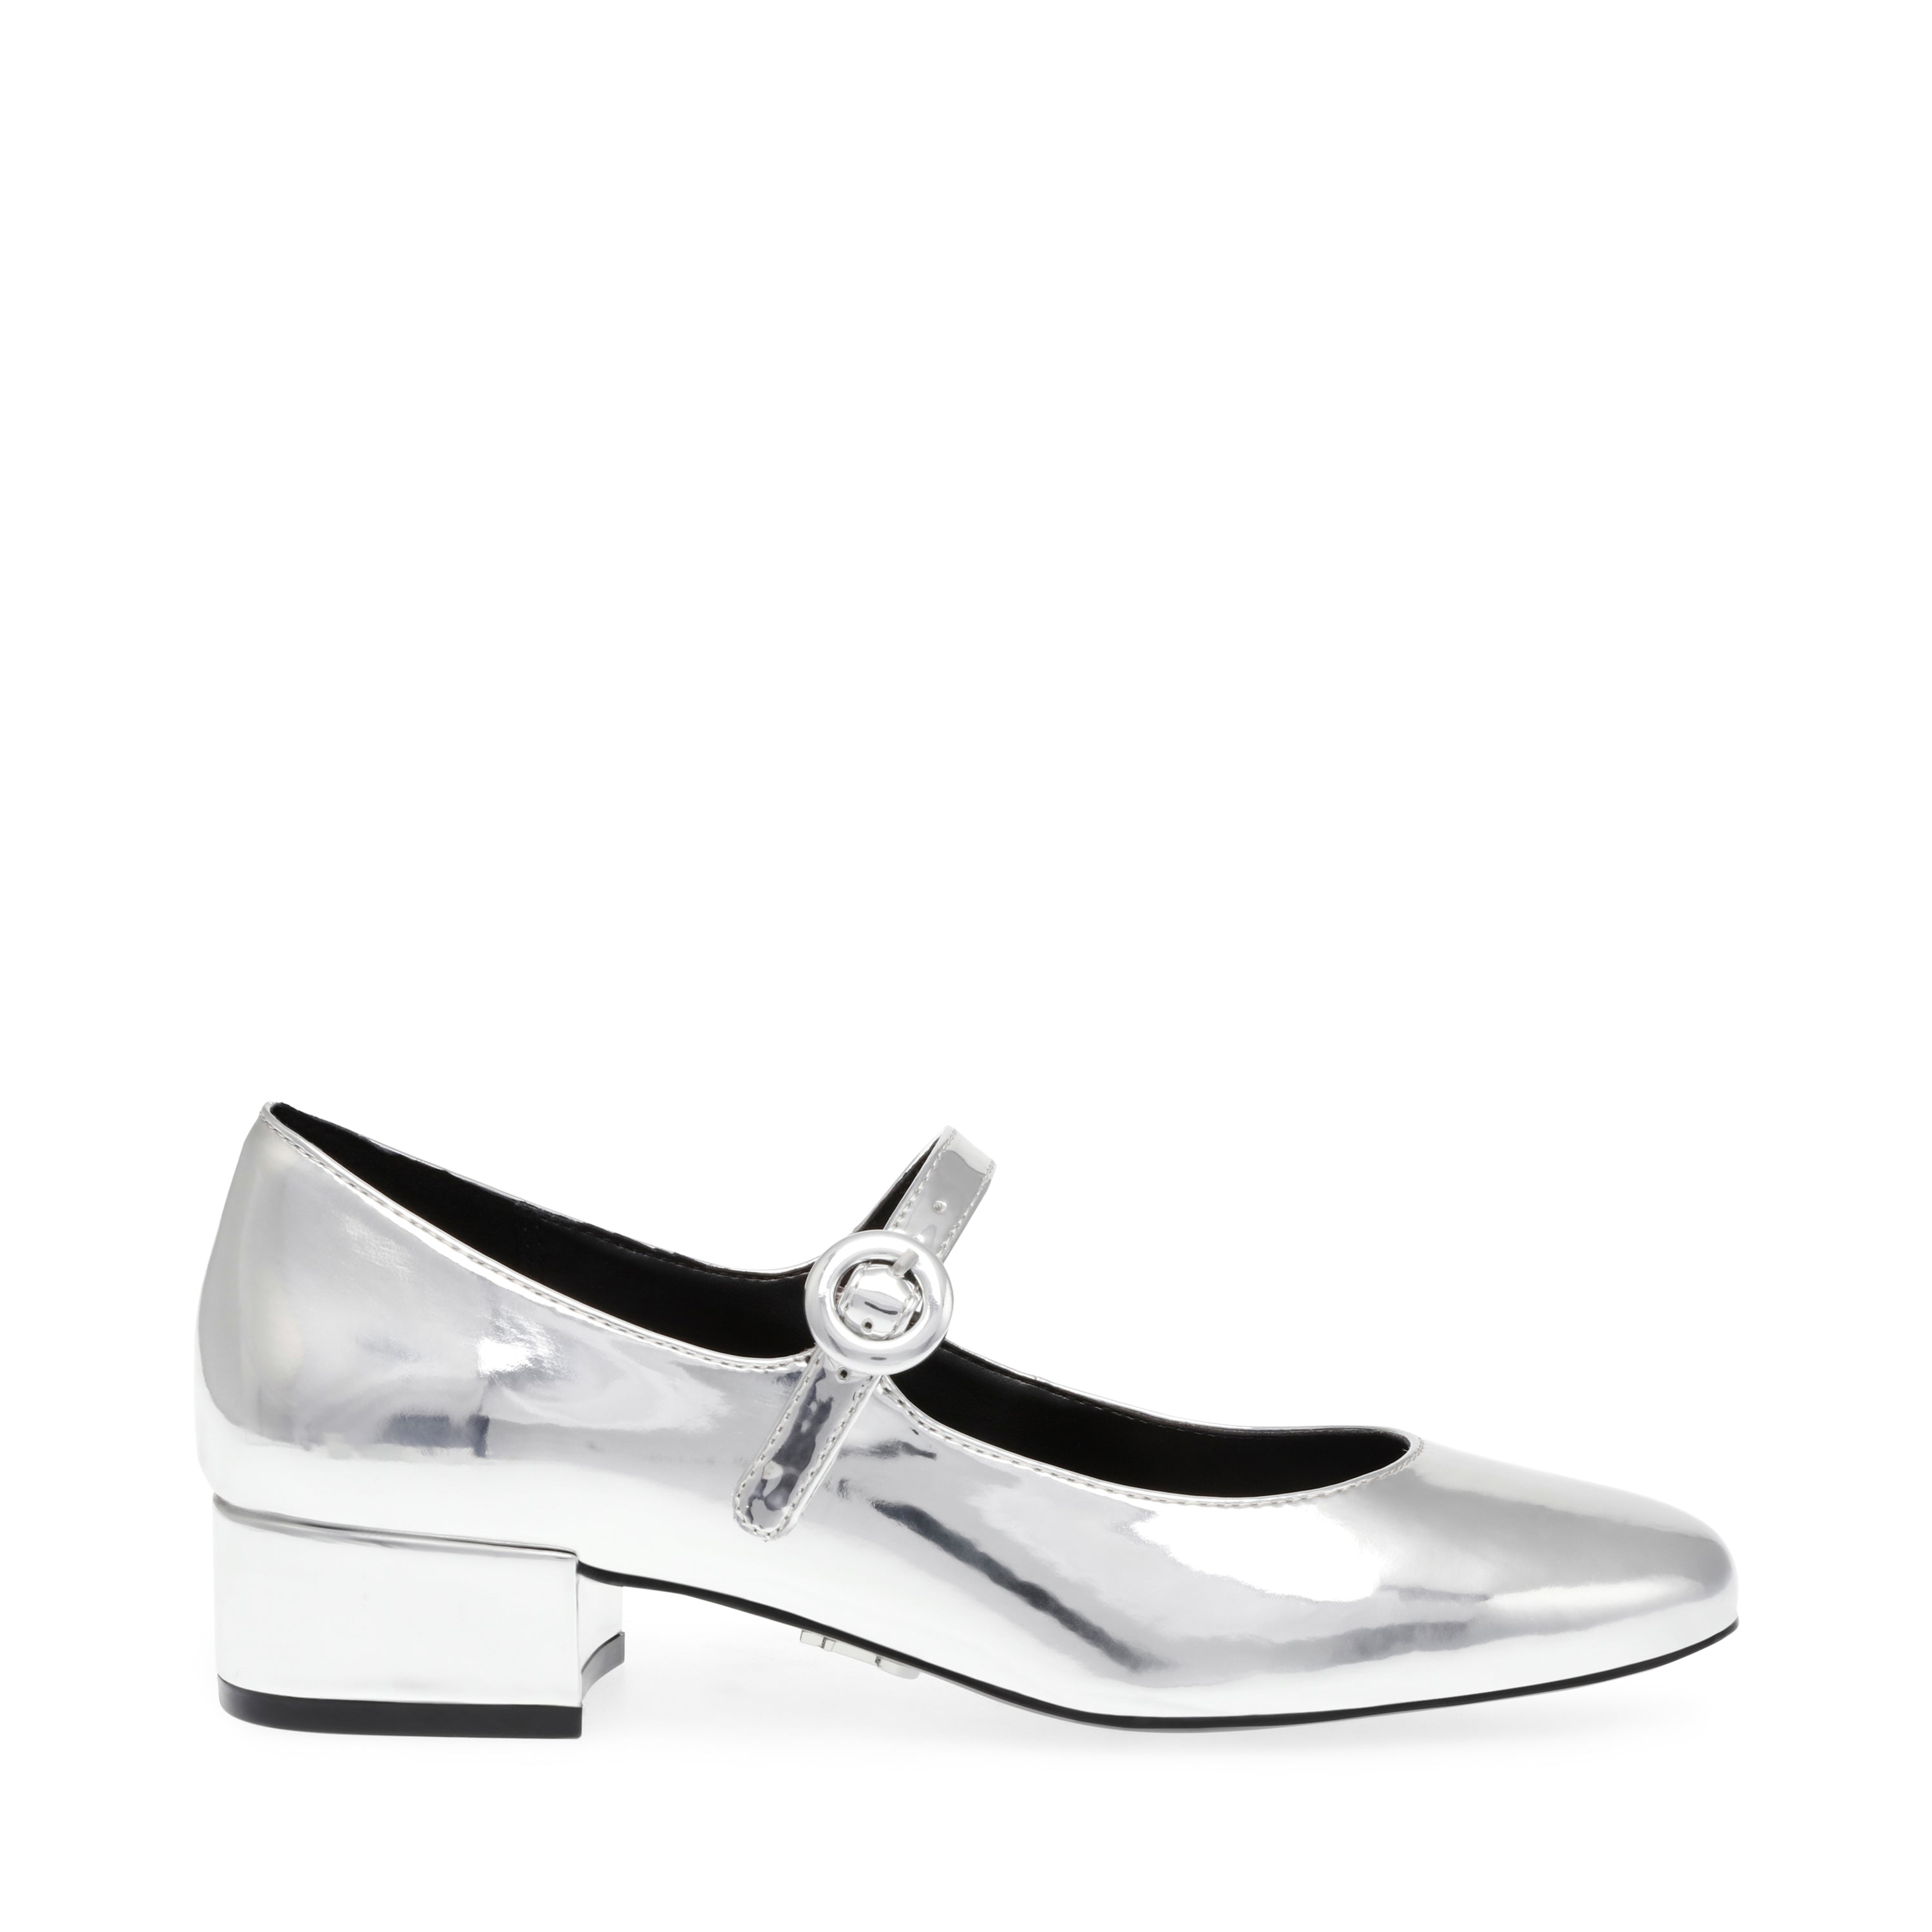 SESSILY Silver Low Block Heel Mary Jane Pump | Women's Designer Heels ...